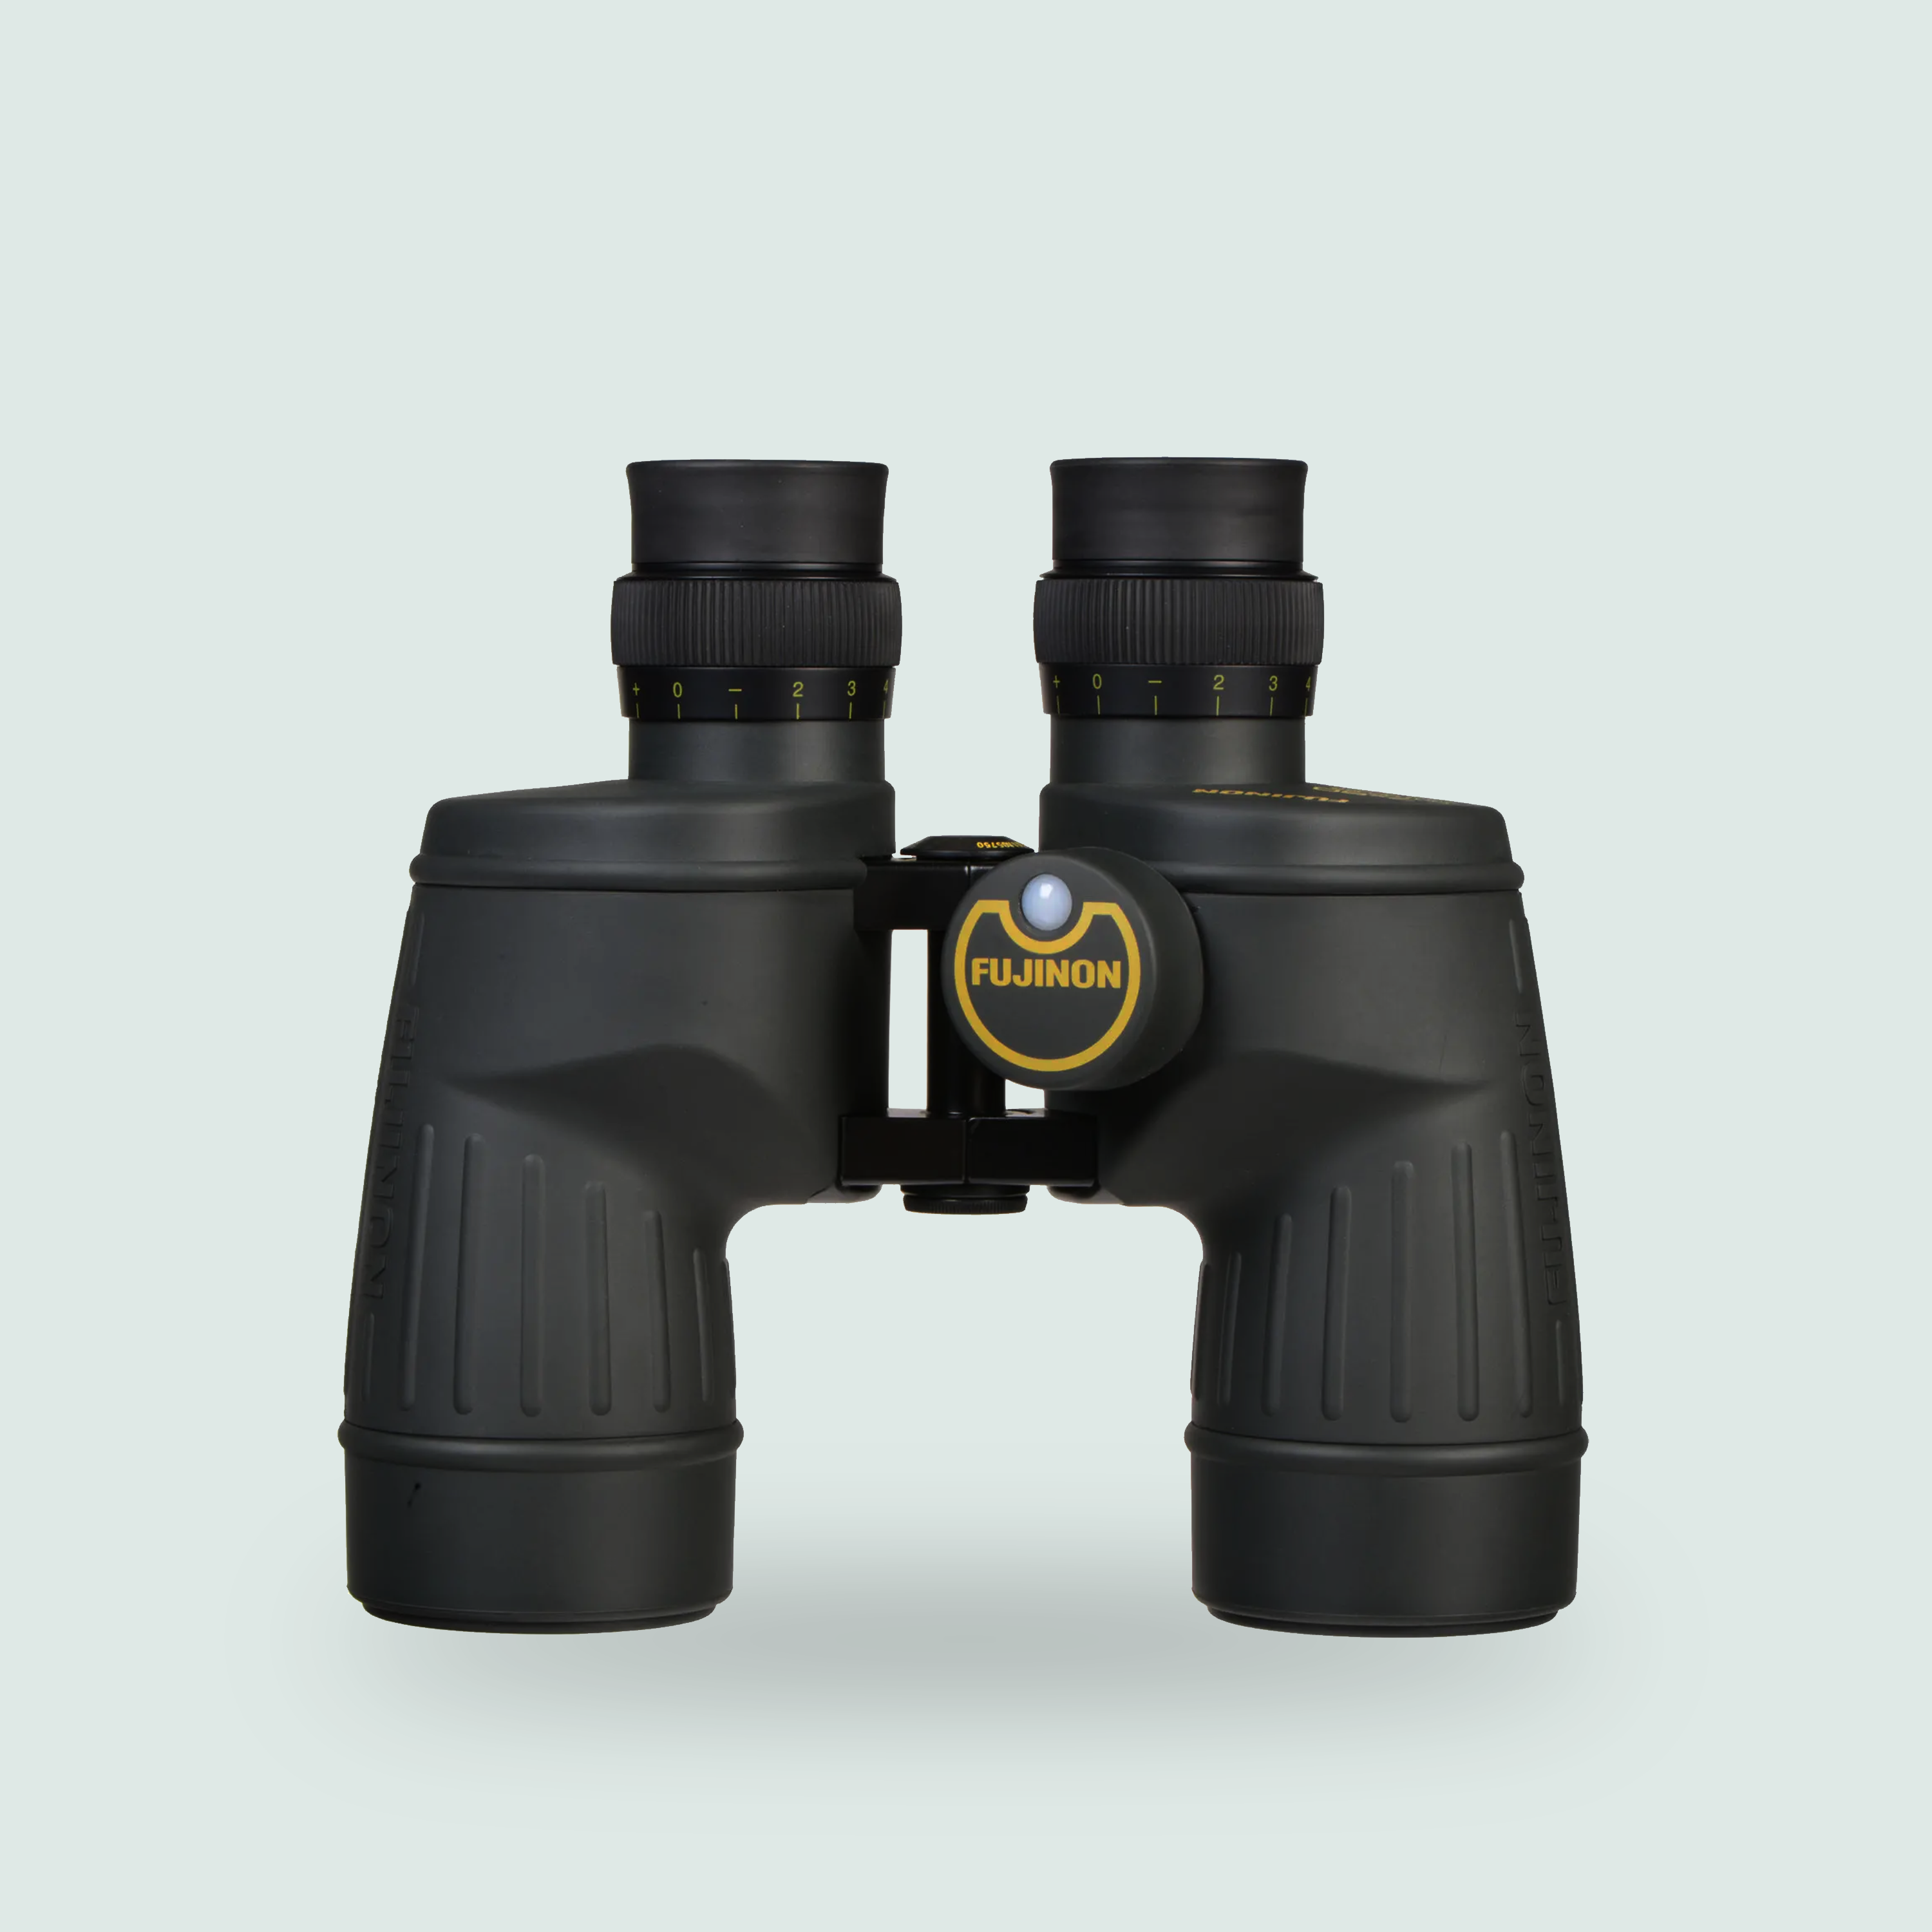 7X50 FMTRC-SX2 Binoculars with compass